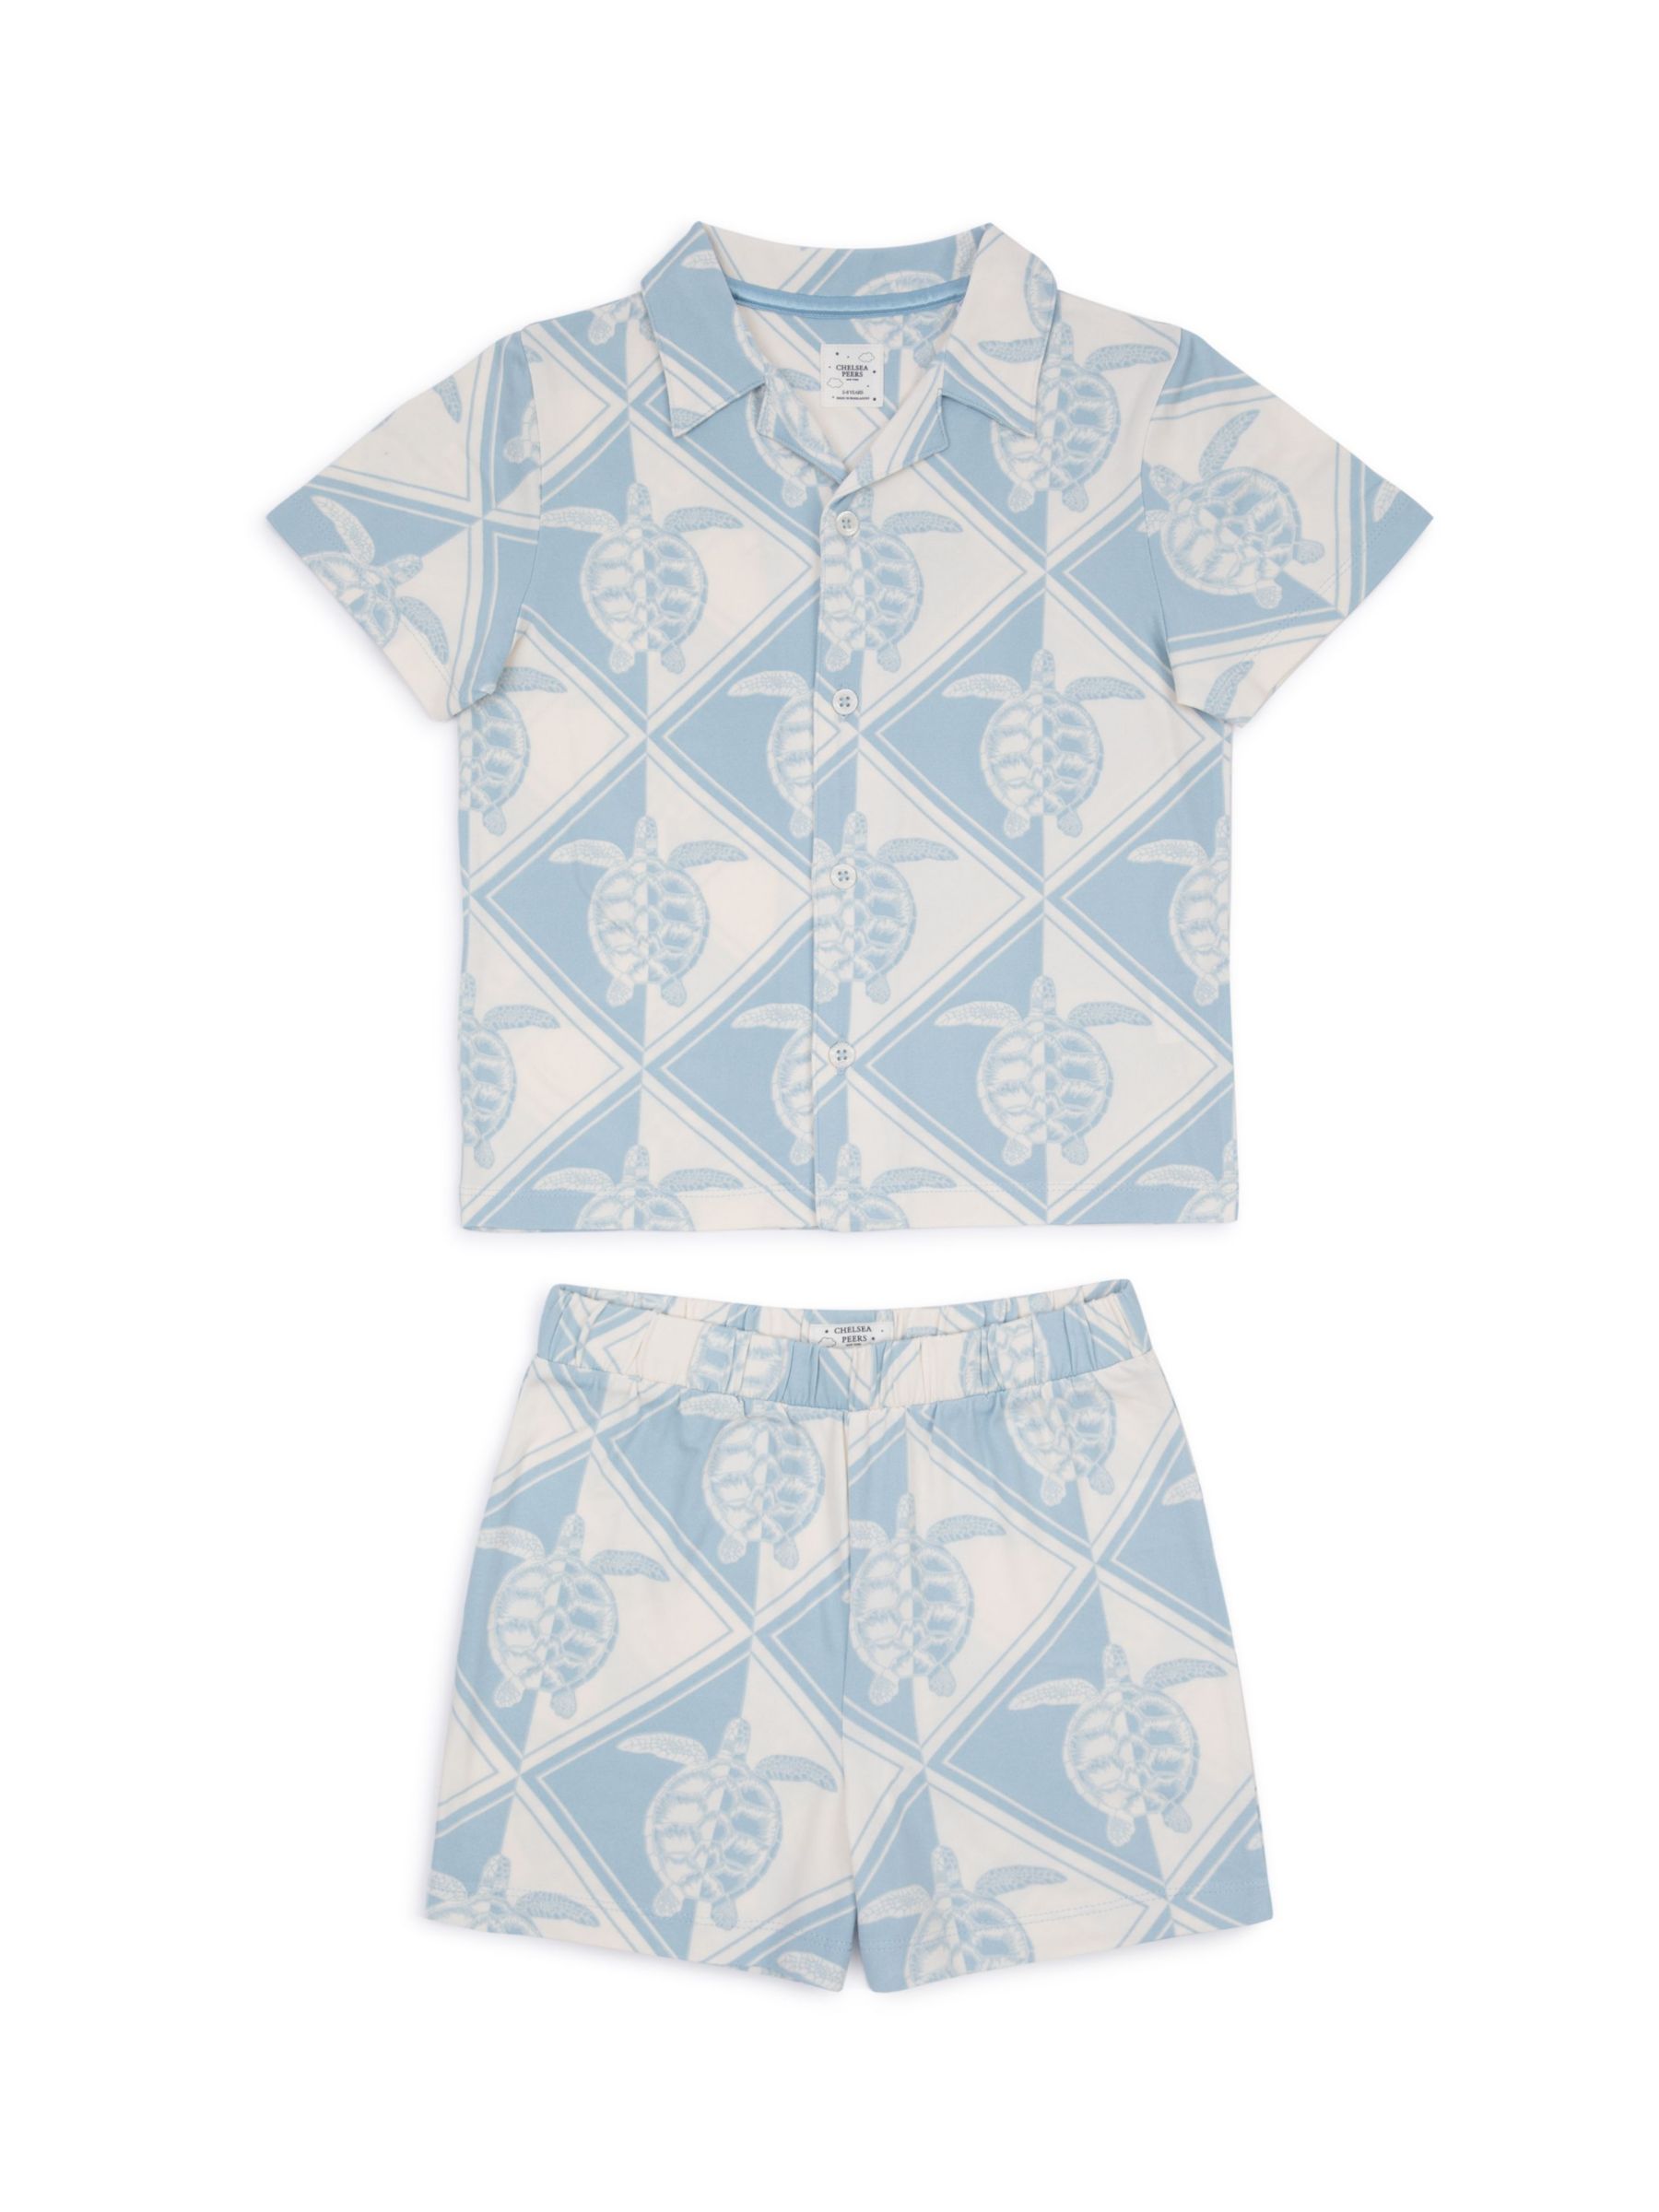 Chelsea Peers Kids' Tiled Turtle Short Pyjama Set, Off White/Blue, 1-2 years